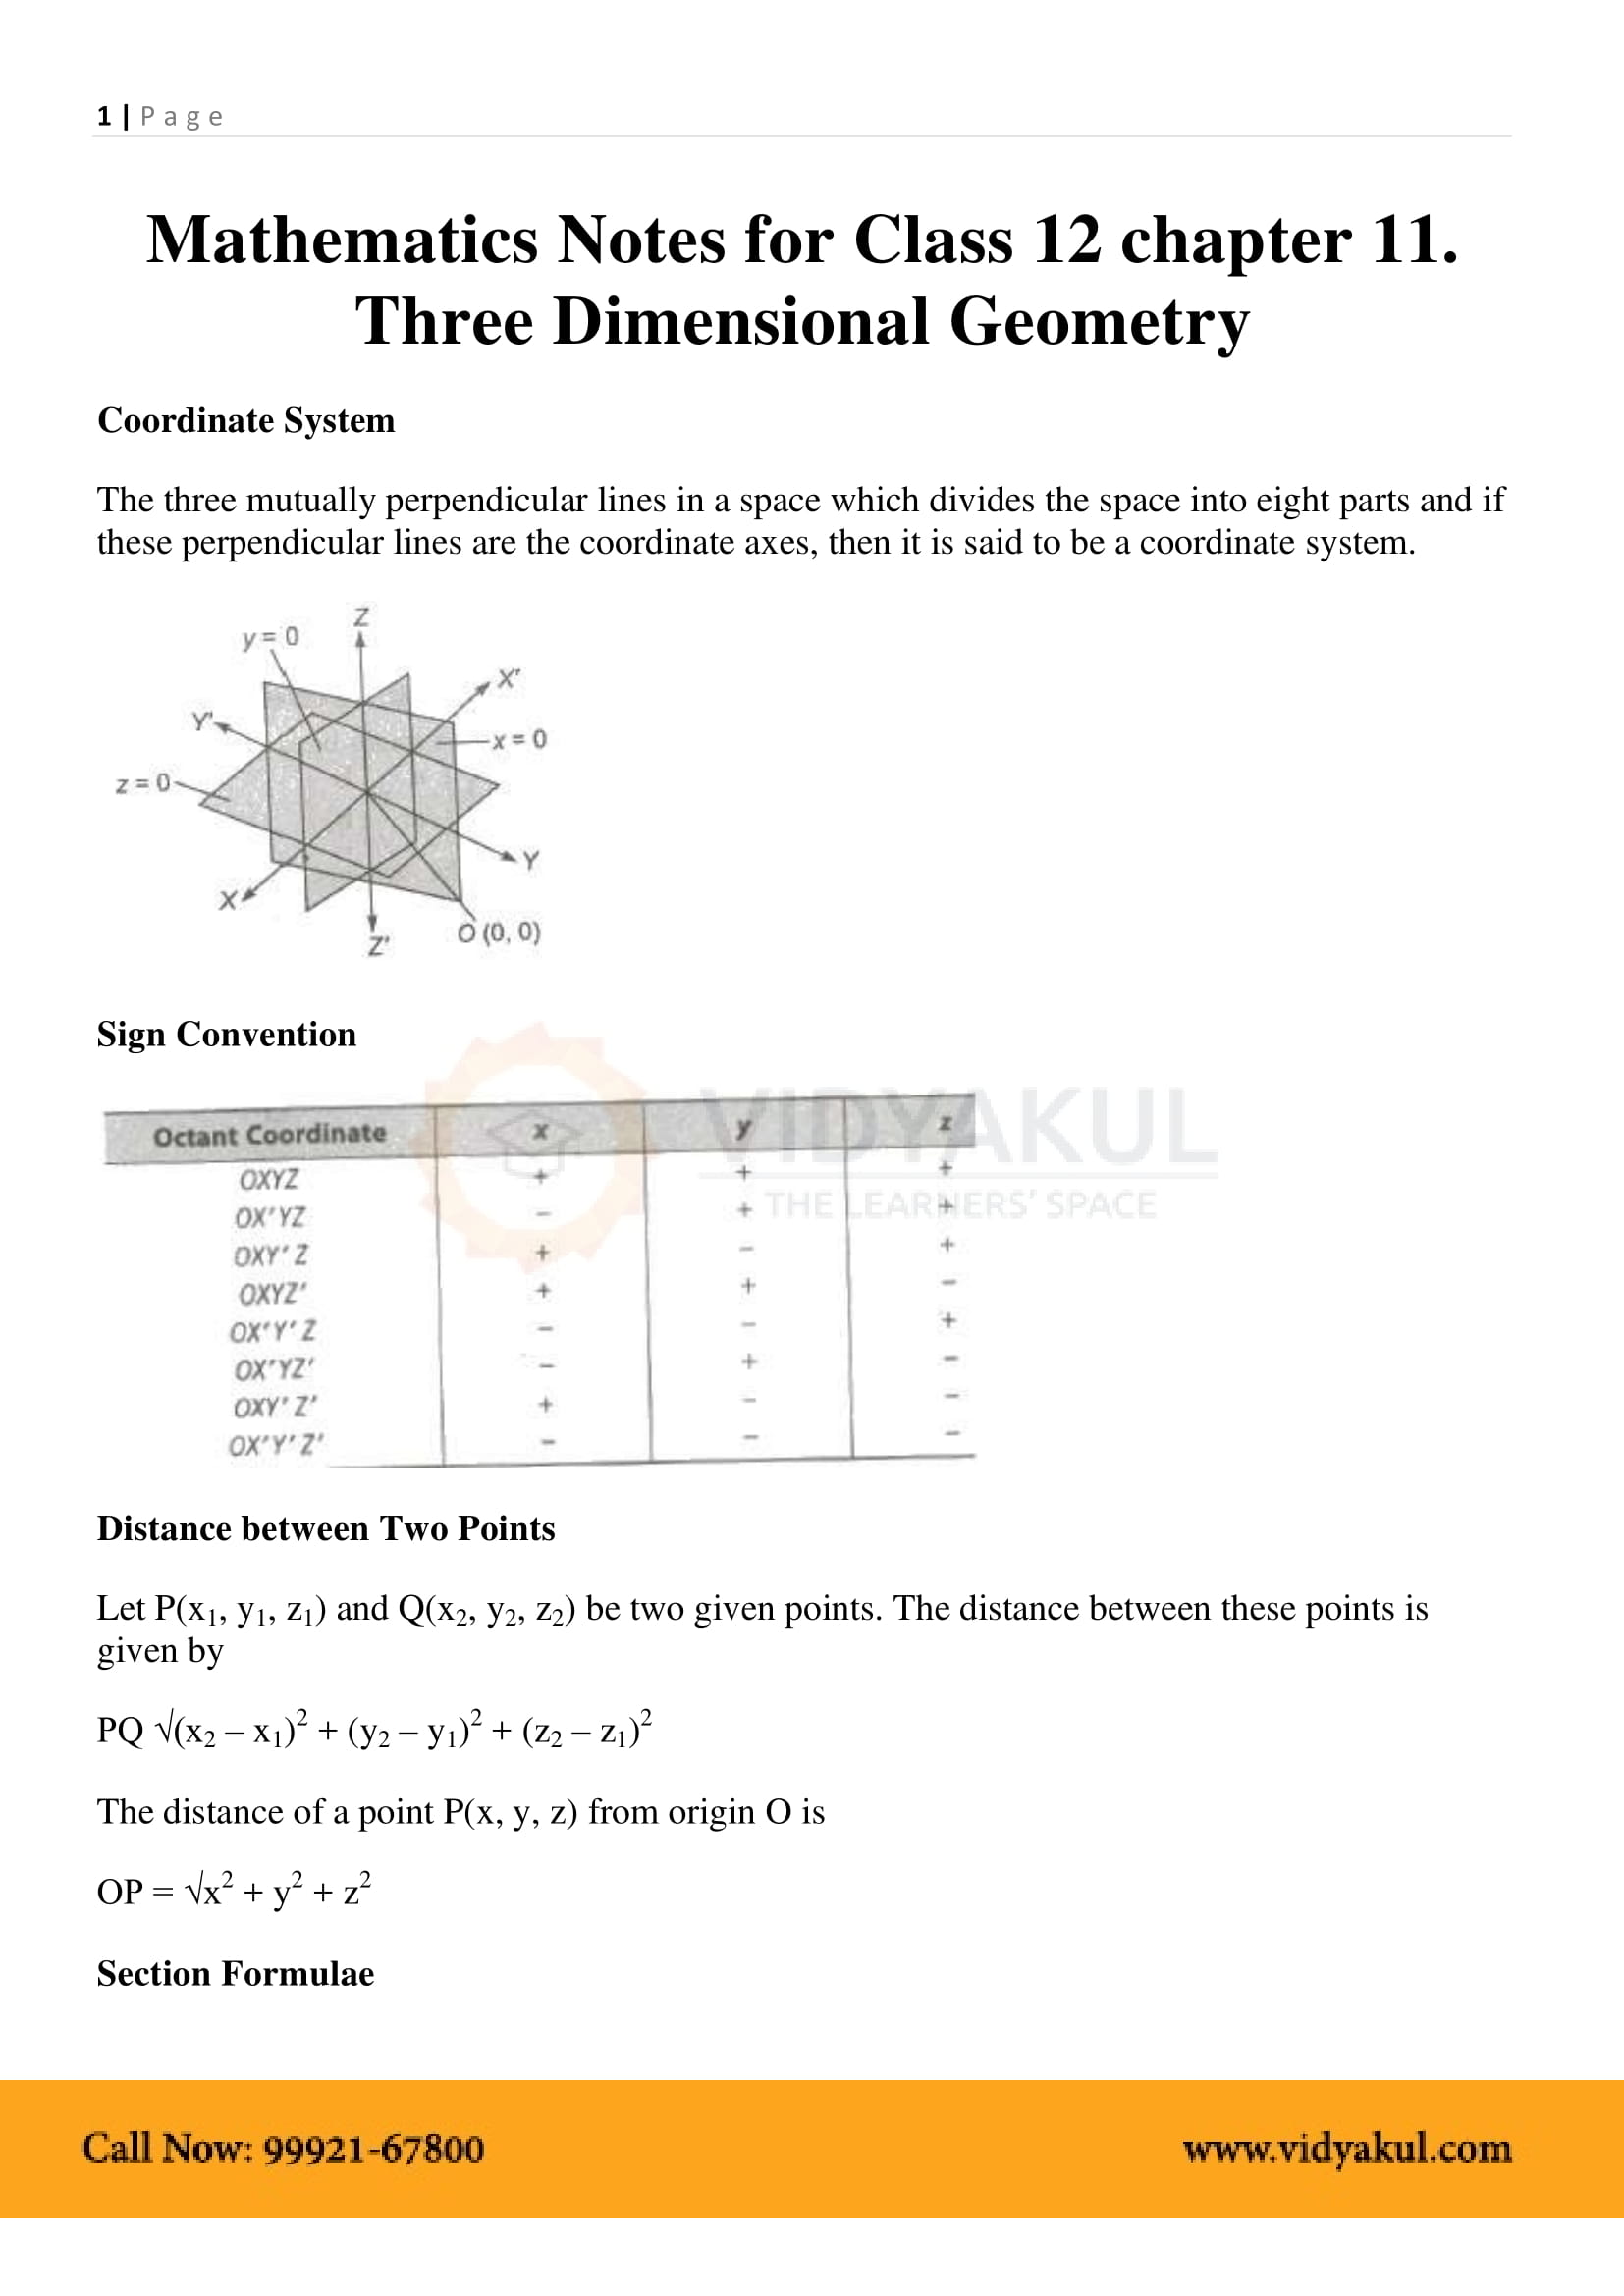 Geometry formulas pdf in marathi